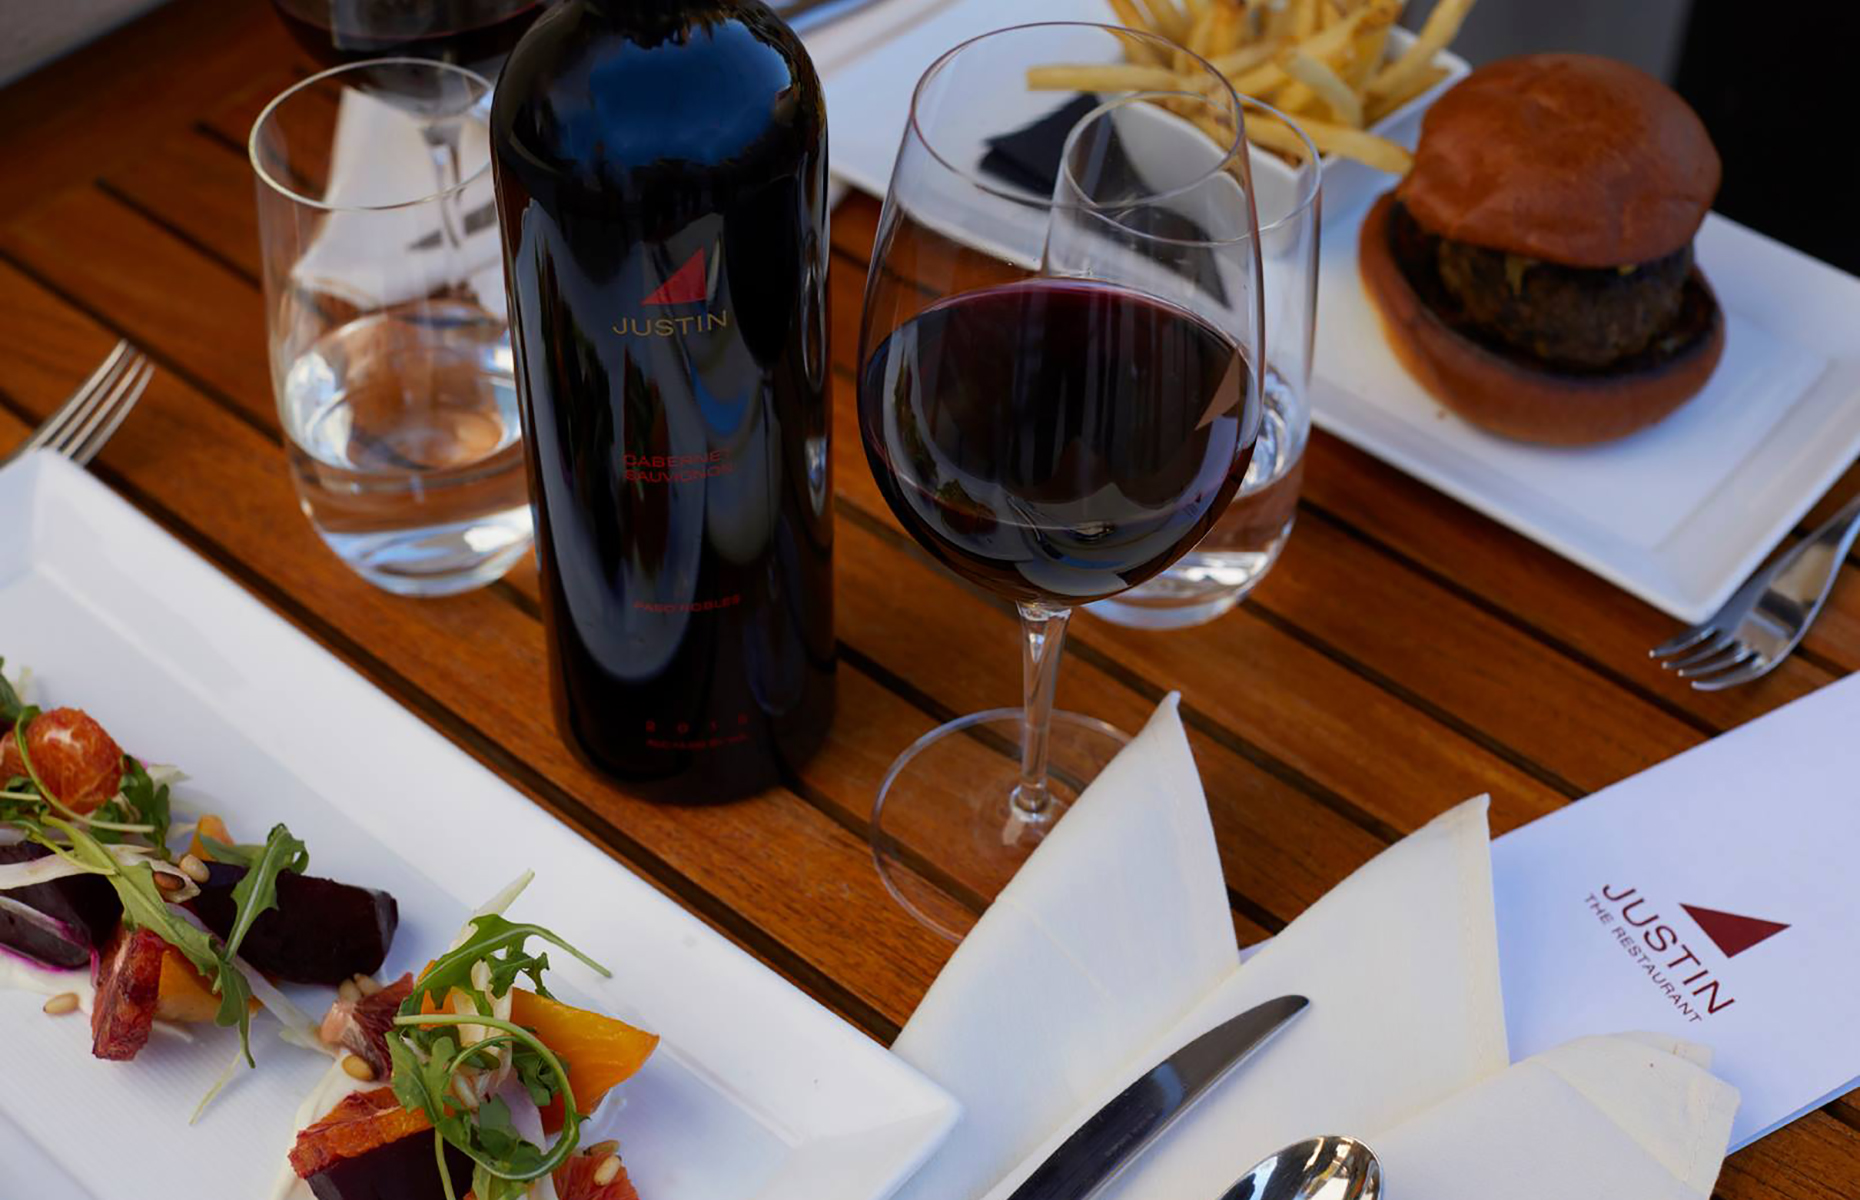 Food and wine at JUSTIN (Image: JUSTIN Vineyards & Winery)